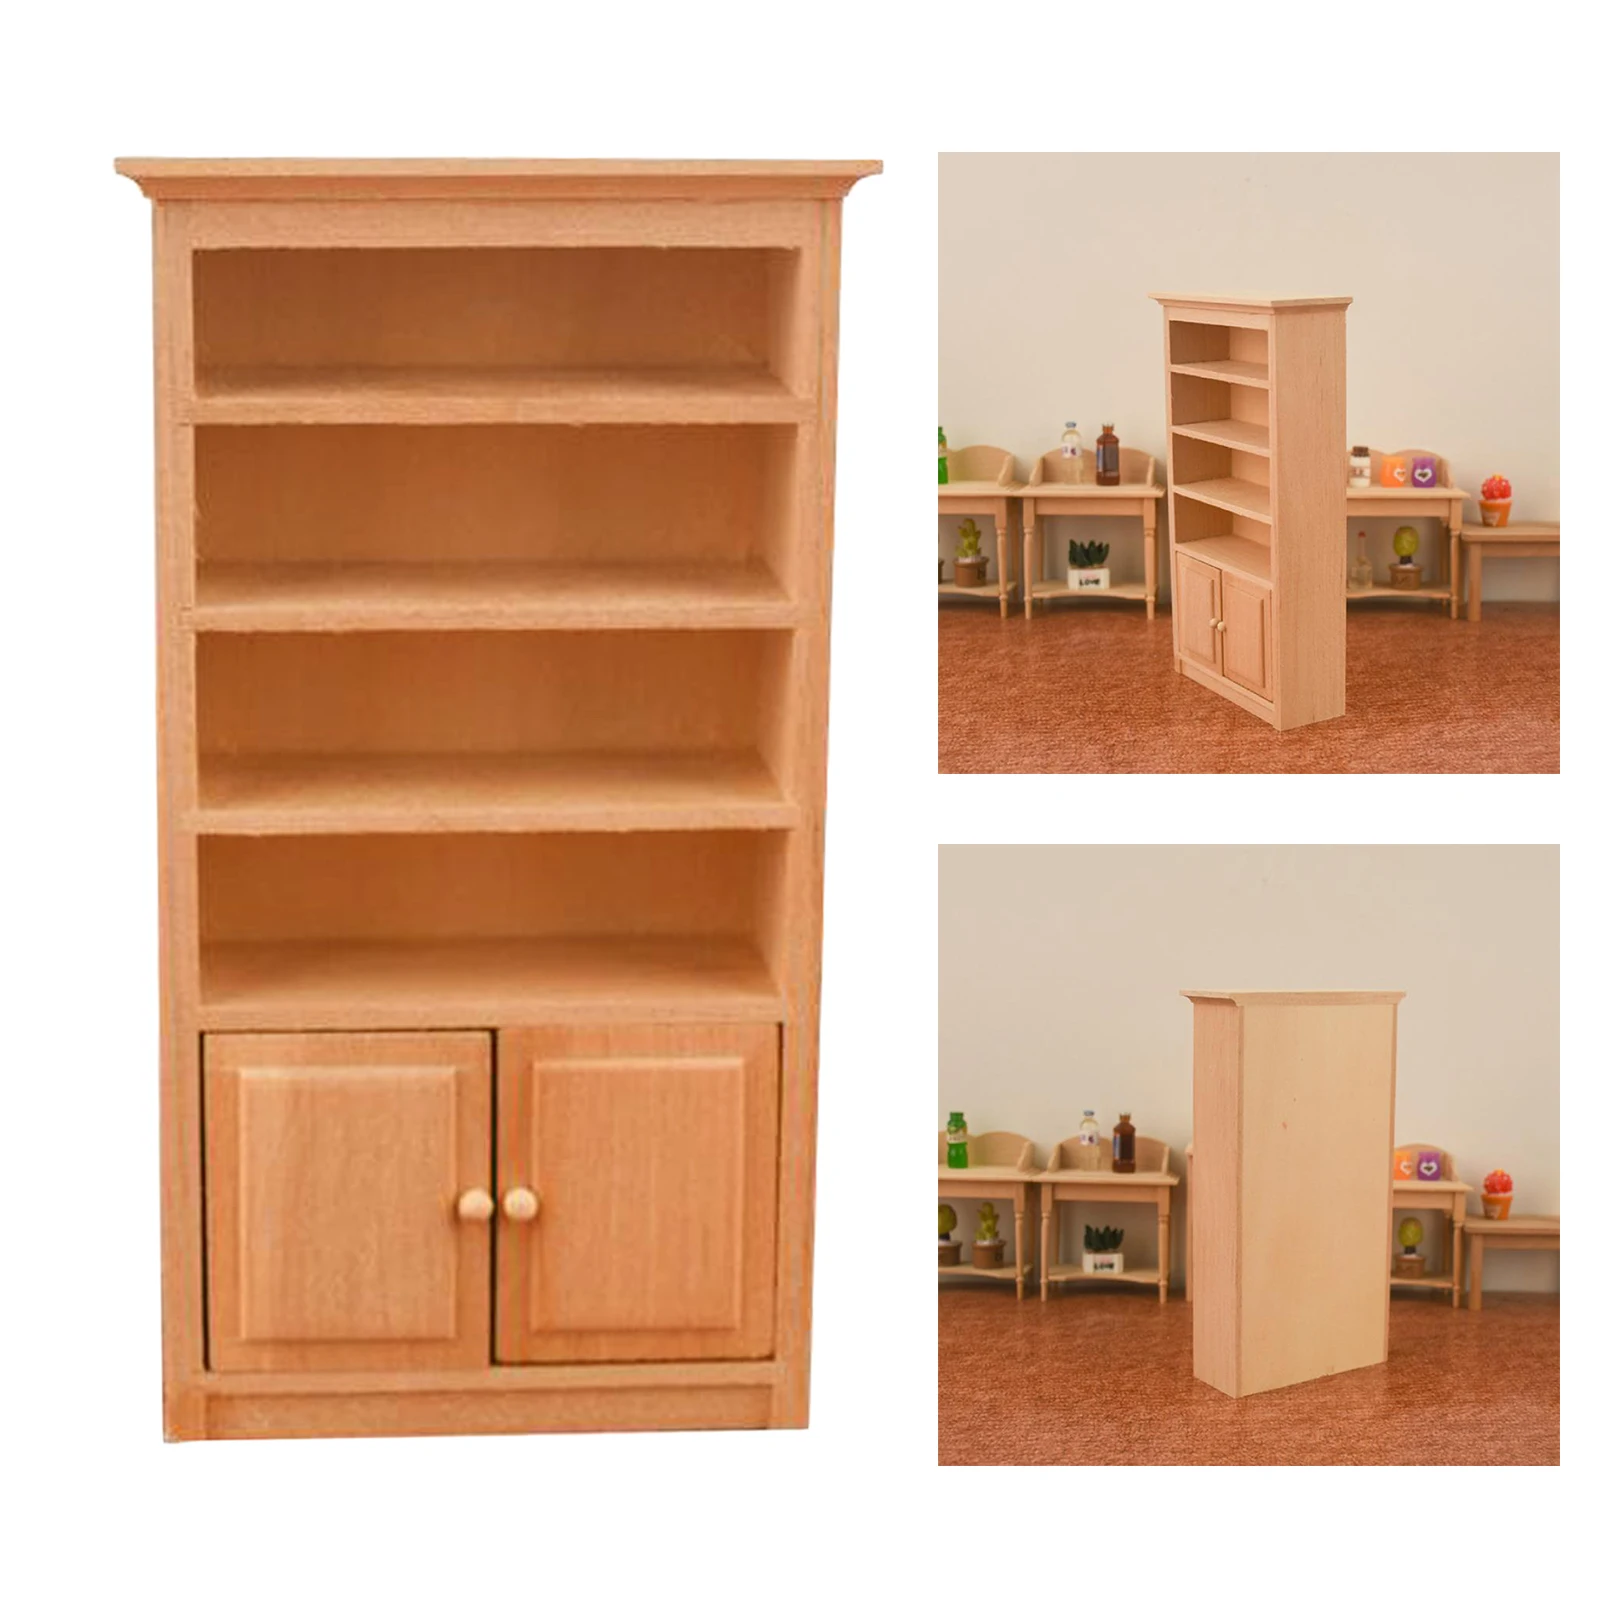 1/12 Dollhouse Wood Cabinet Bookshelf Model Living Room Supplies Scenery Decor